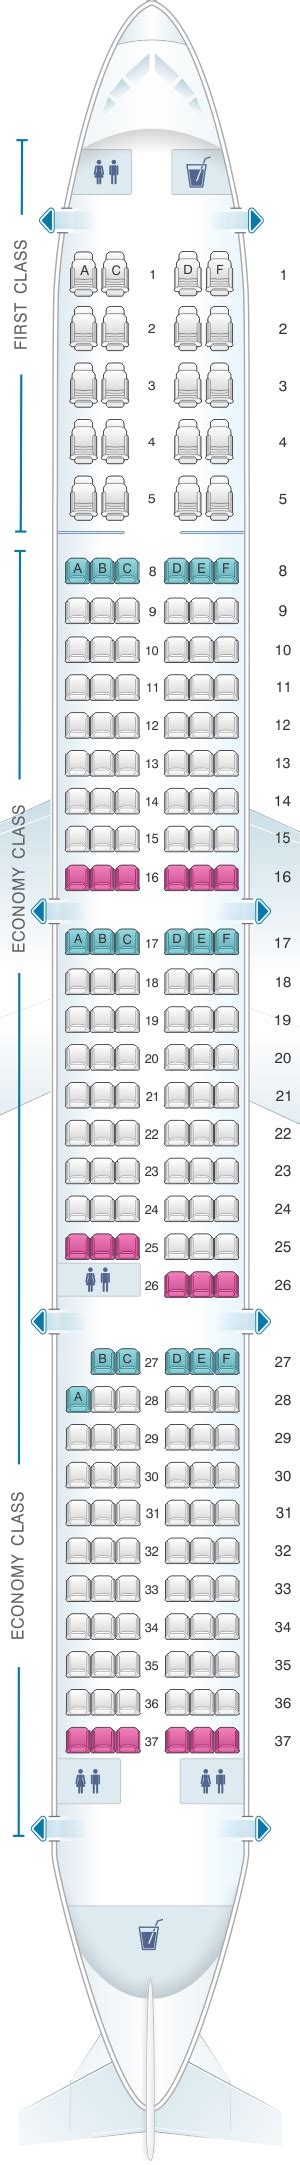 50 American Airbus A321 Seating Chart Pics Airbus Way